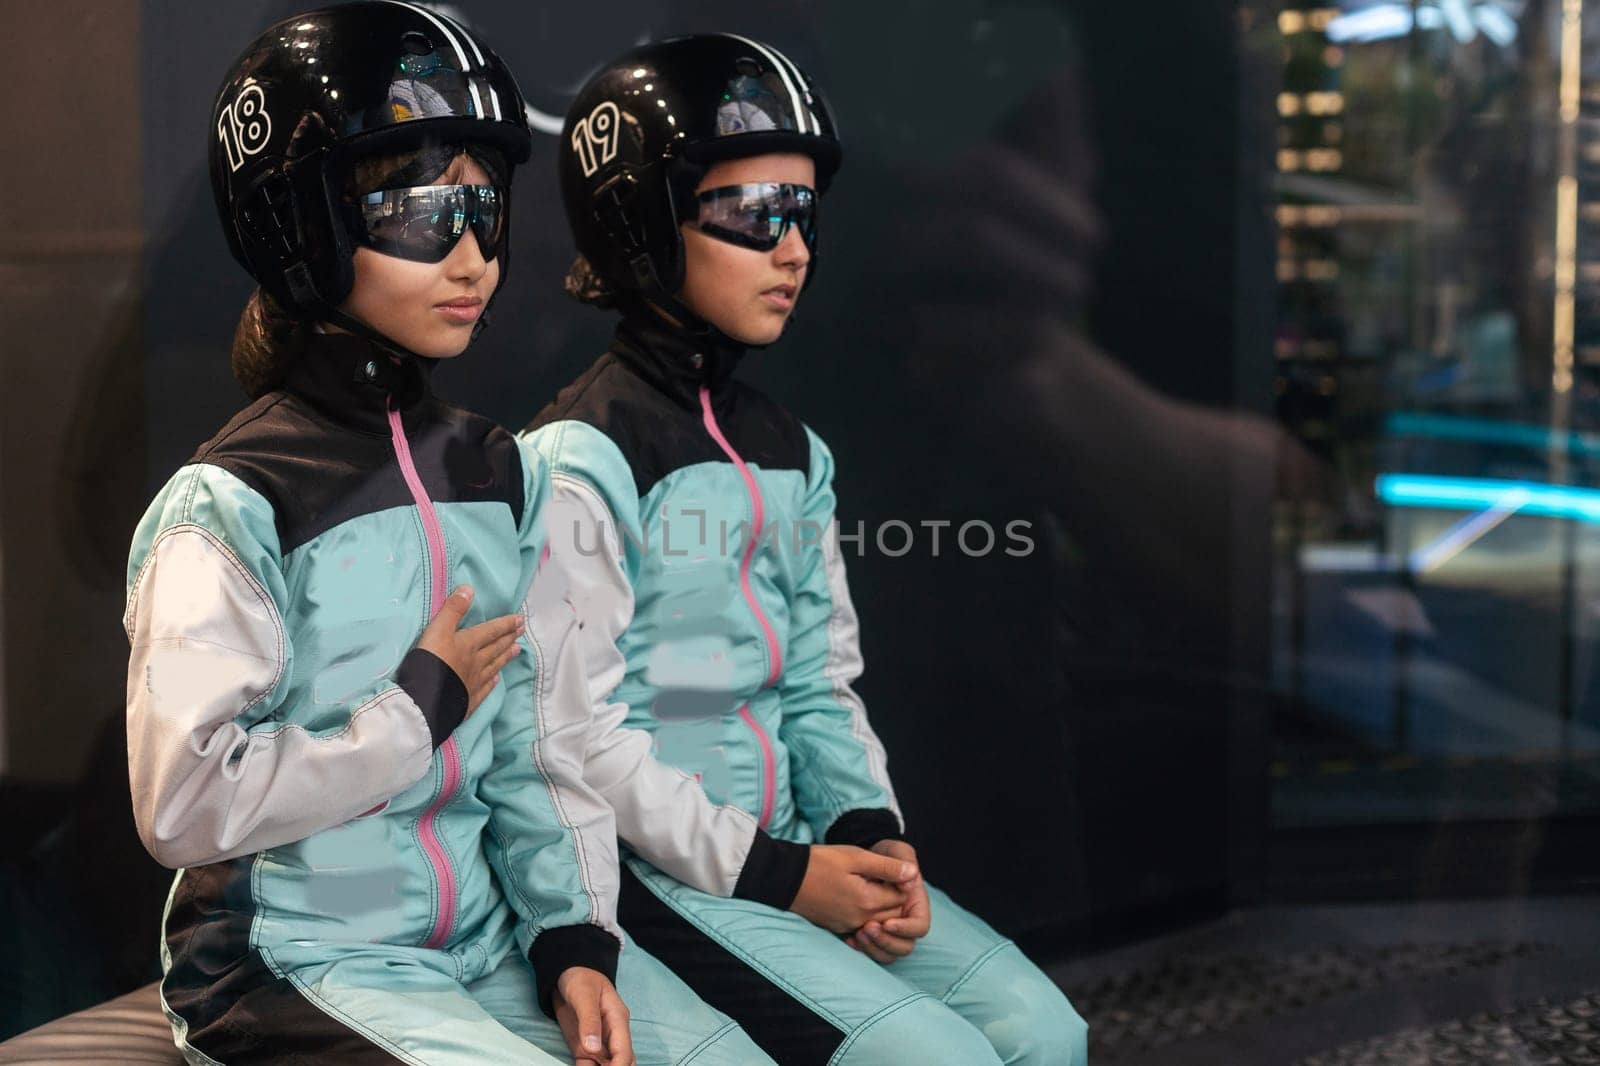 children in astronaut costumes, girls. High quality photo